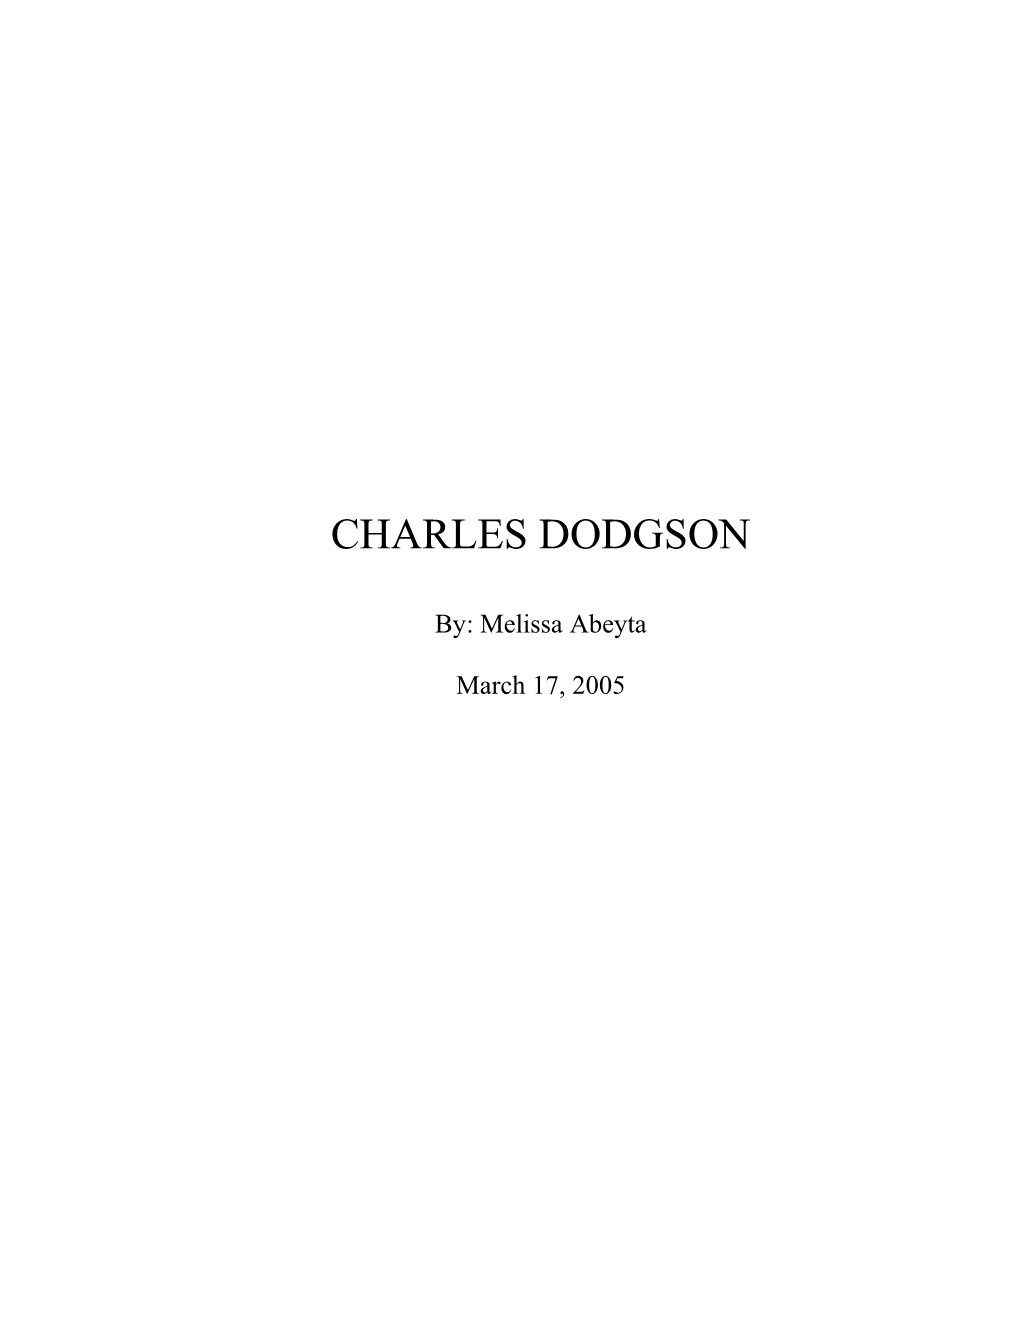 Charles Dodgson Led a Very Interesting Life